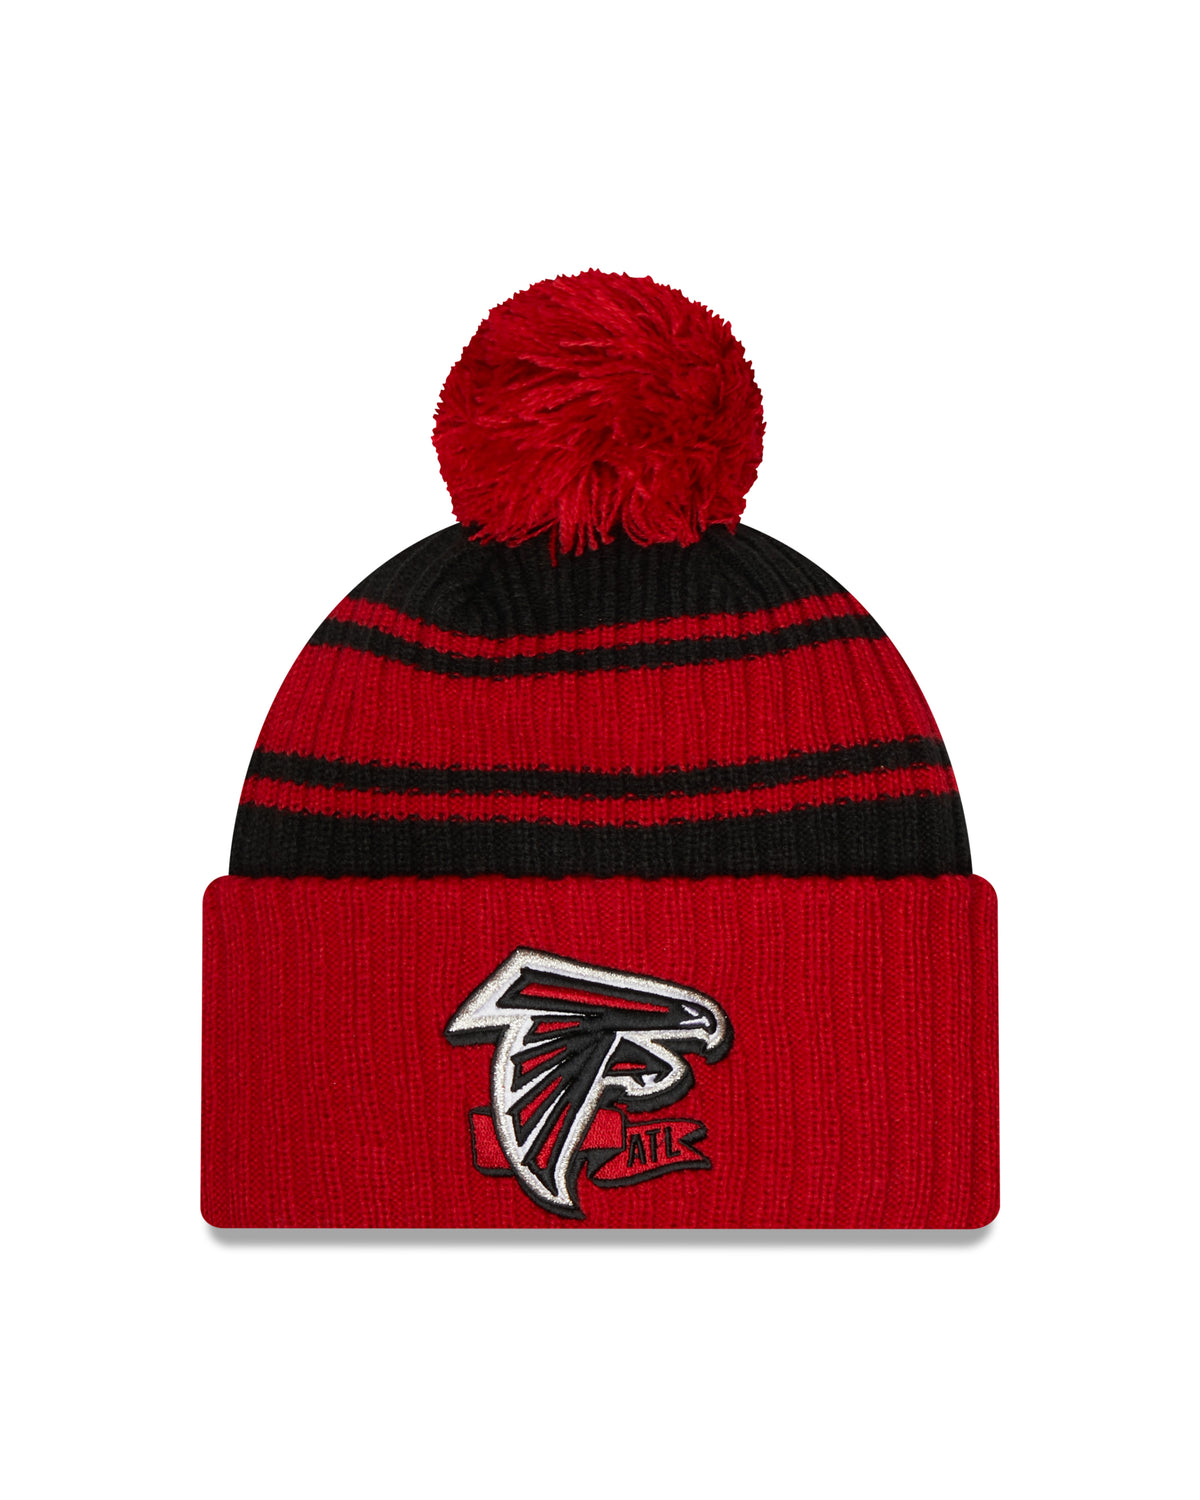 New Era NFL Atlanta Falcons  Knit Beanie Red Black